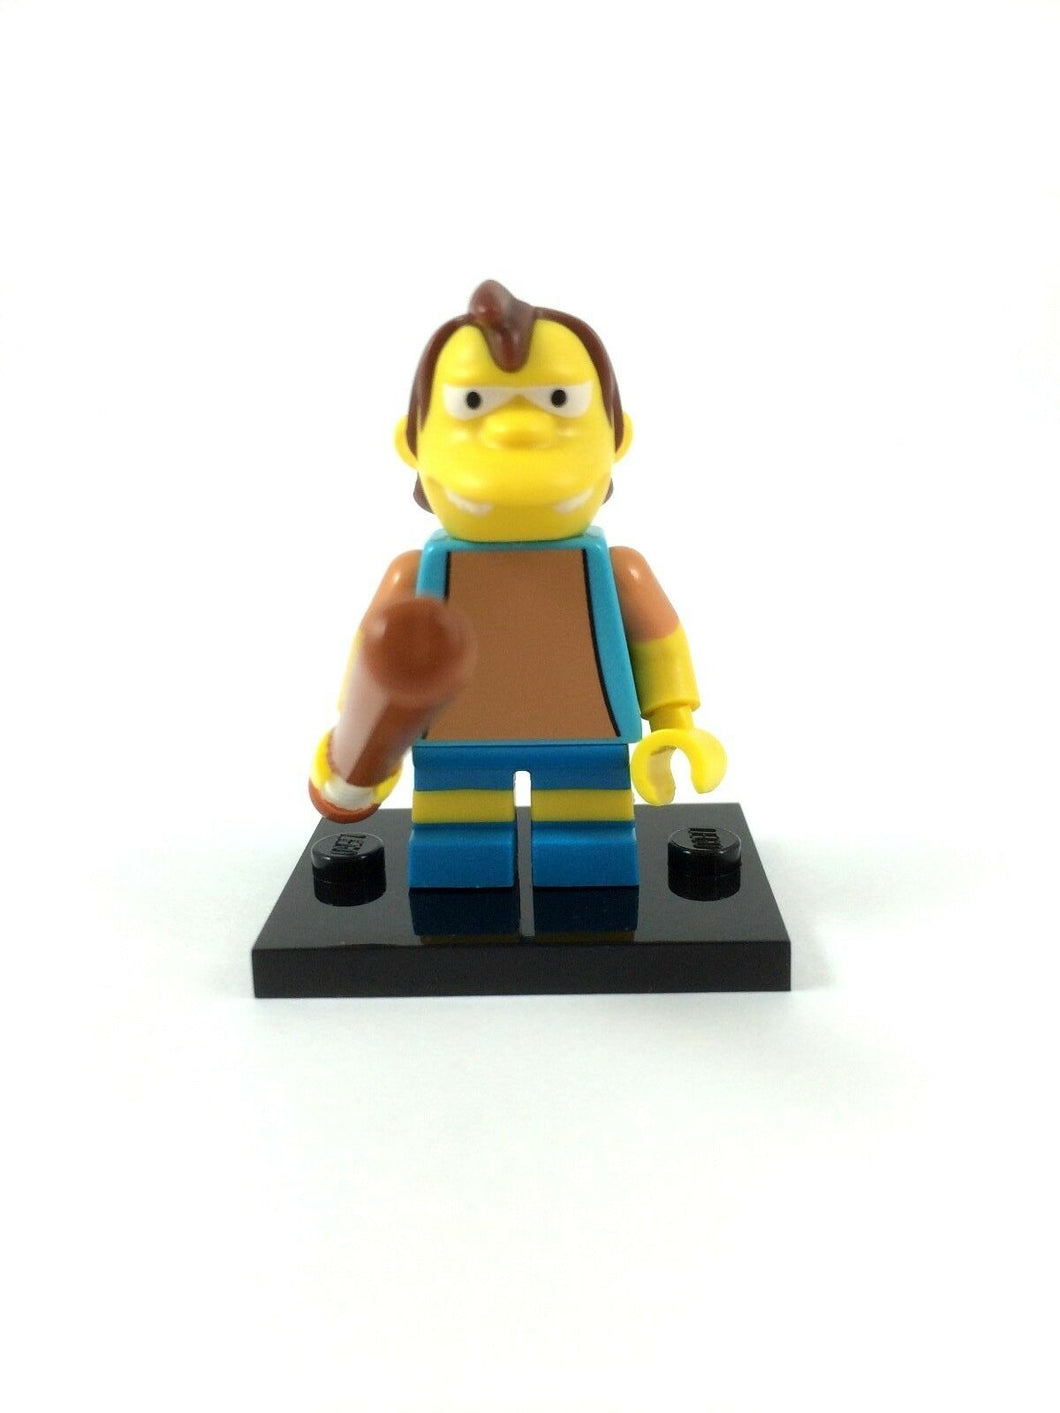 NEW LEGO 71005 MINIFIGURES SERIES S (Simpsons) - Nelson Muntz